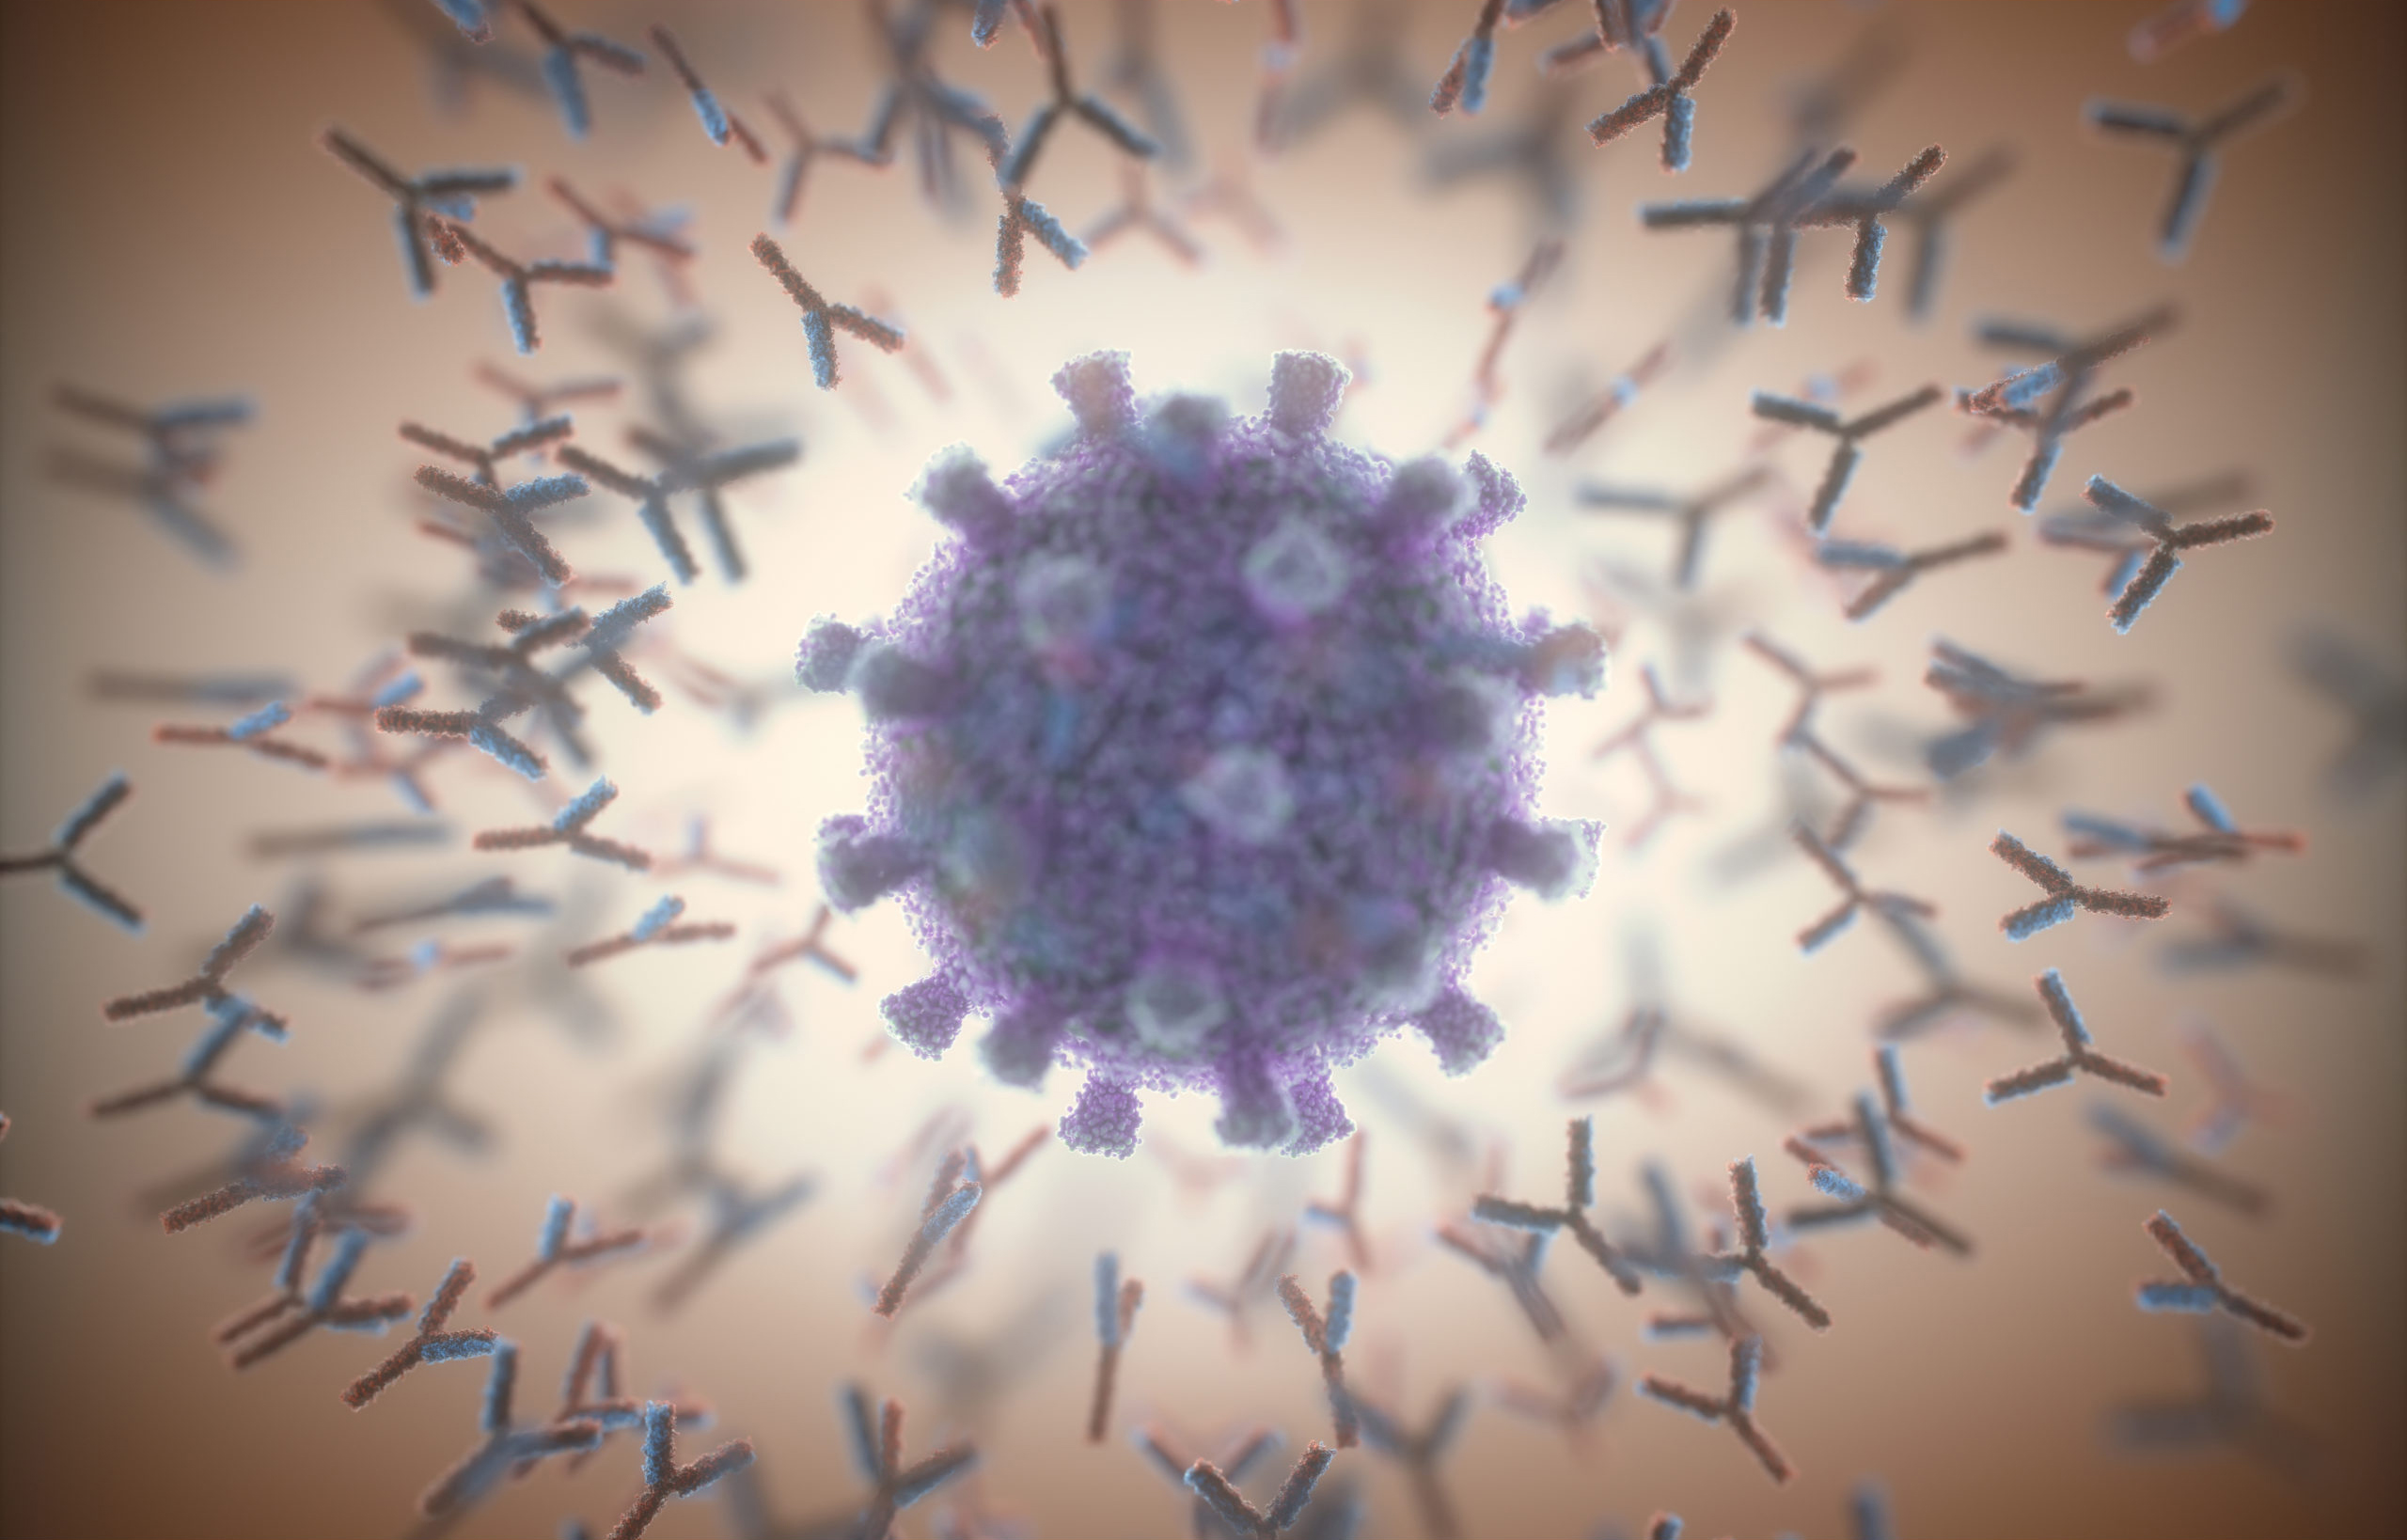 Purple coronavirus at center surrounded by numerous Y-shaped antibodies.